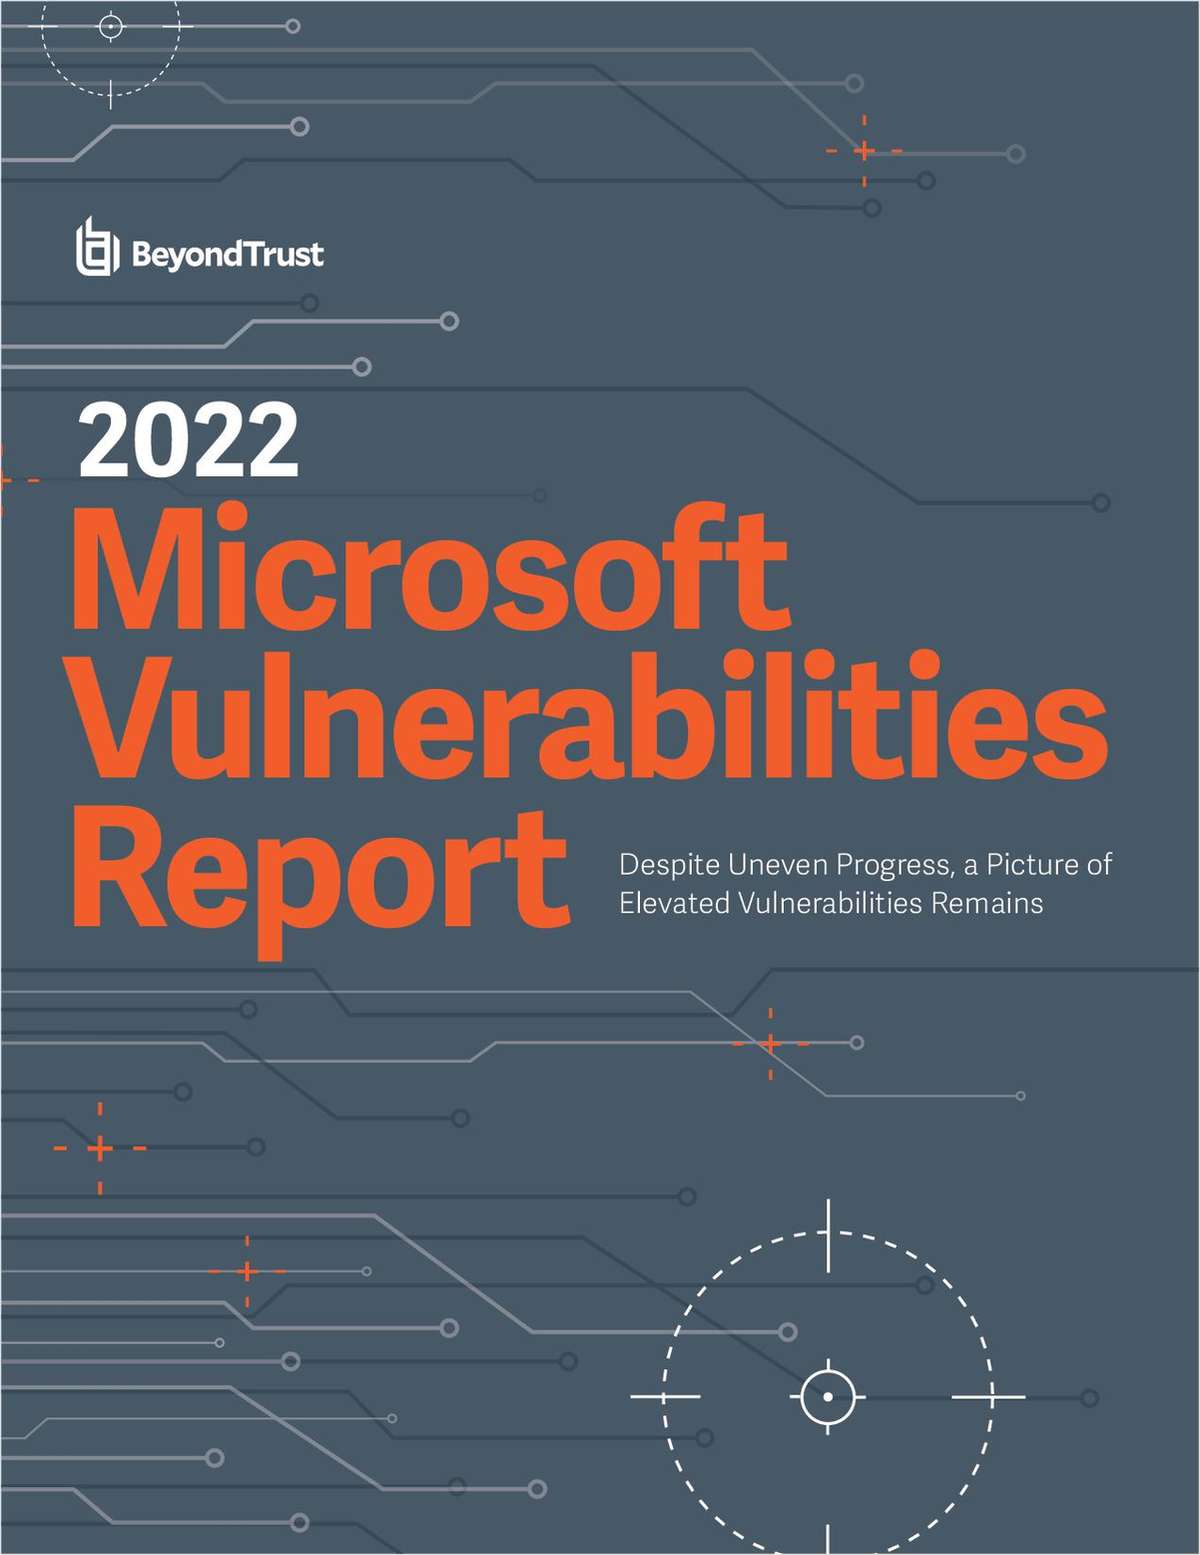 The Annual Microsoft Vulnerabilities Report 2022